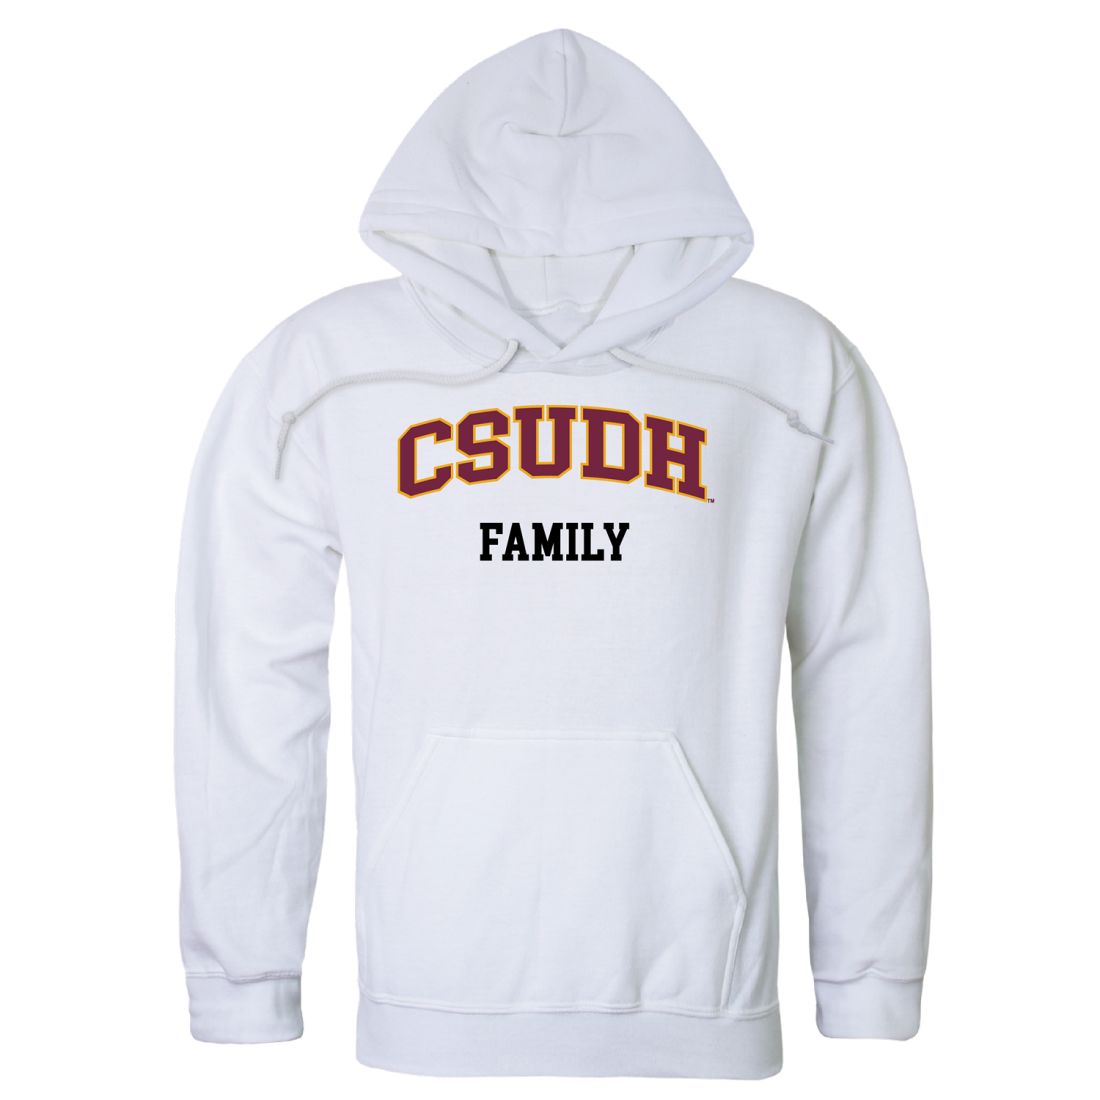 CSUDH California State University Dominguez Hills Toros Family Hoodie Sweatshirts